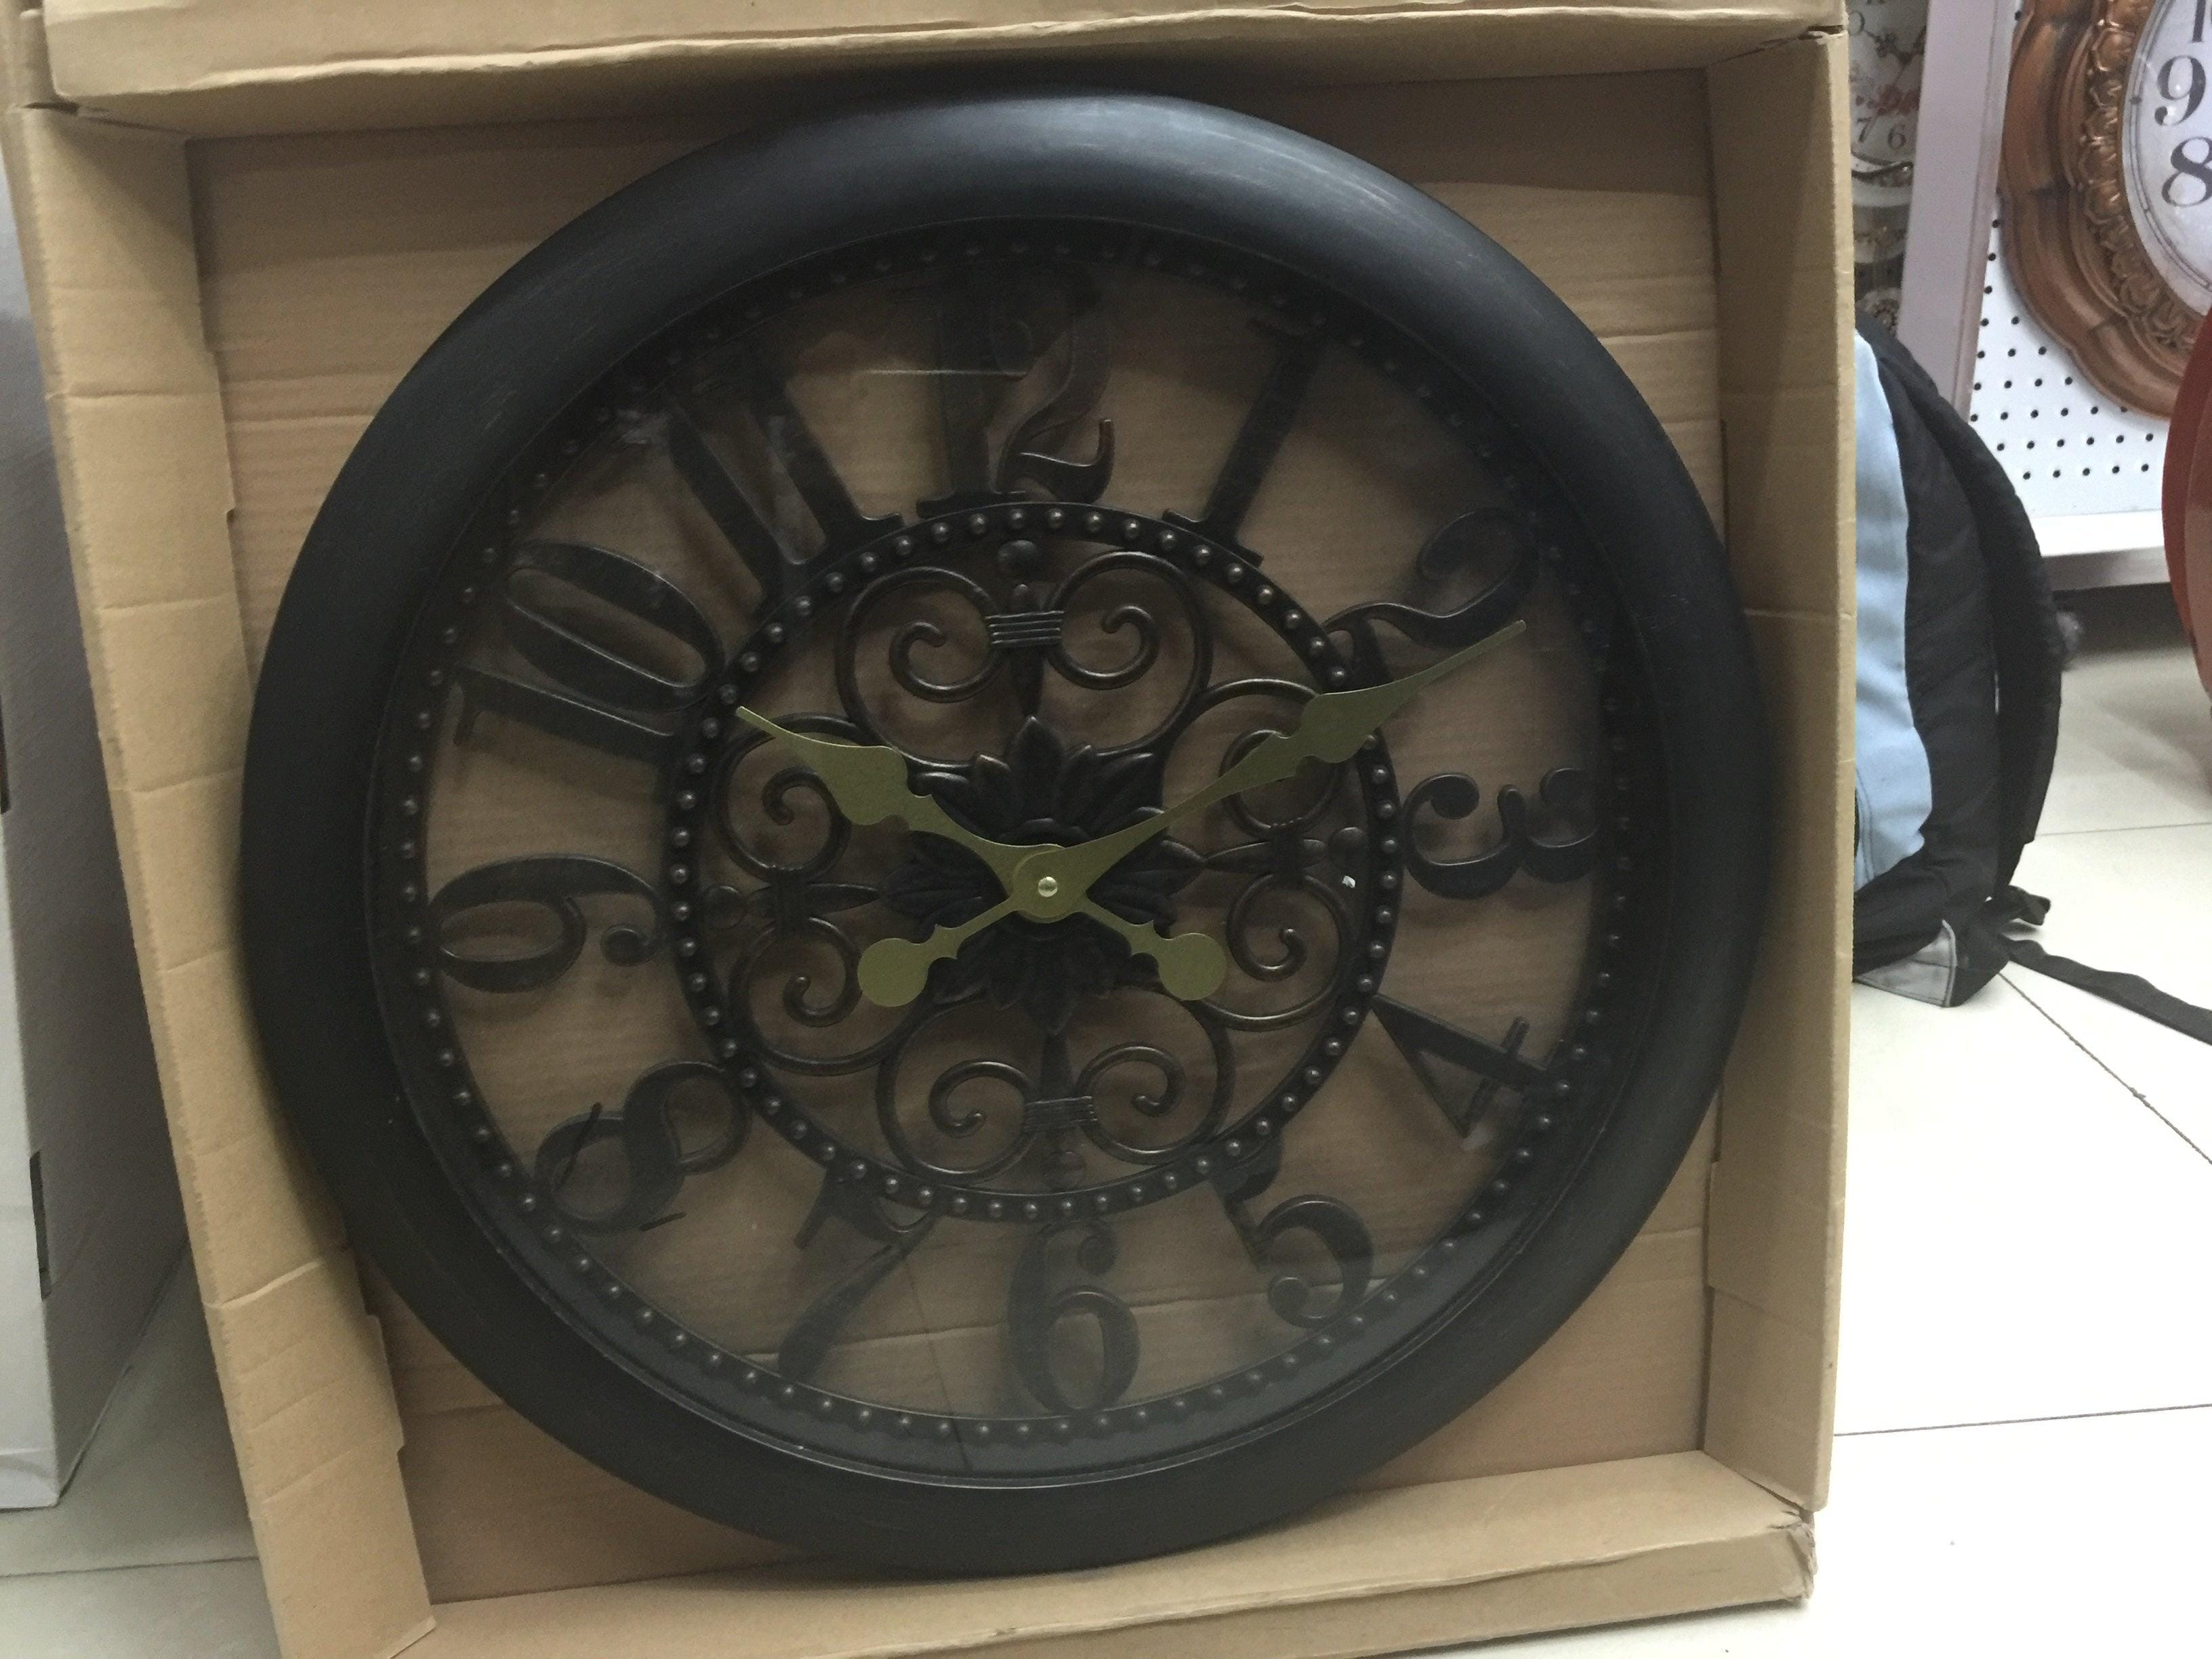 Artistic Vintage Decorative Grande Wall Clock (Black) (Large)